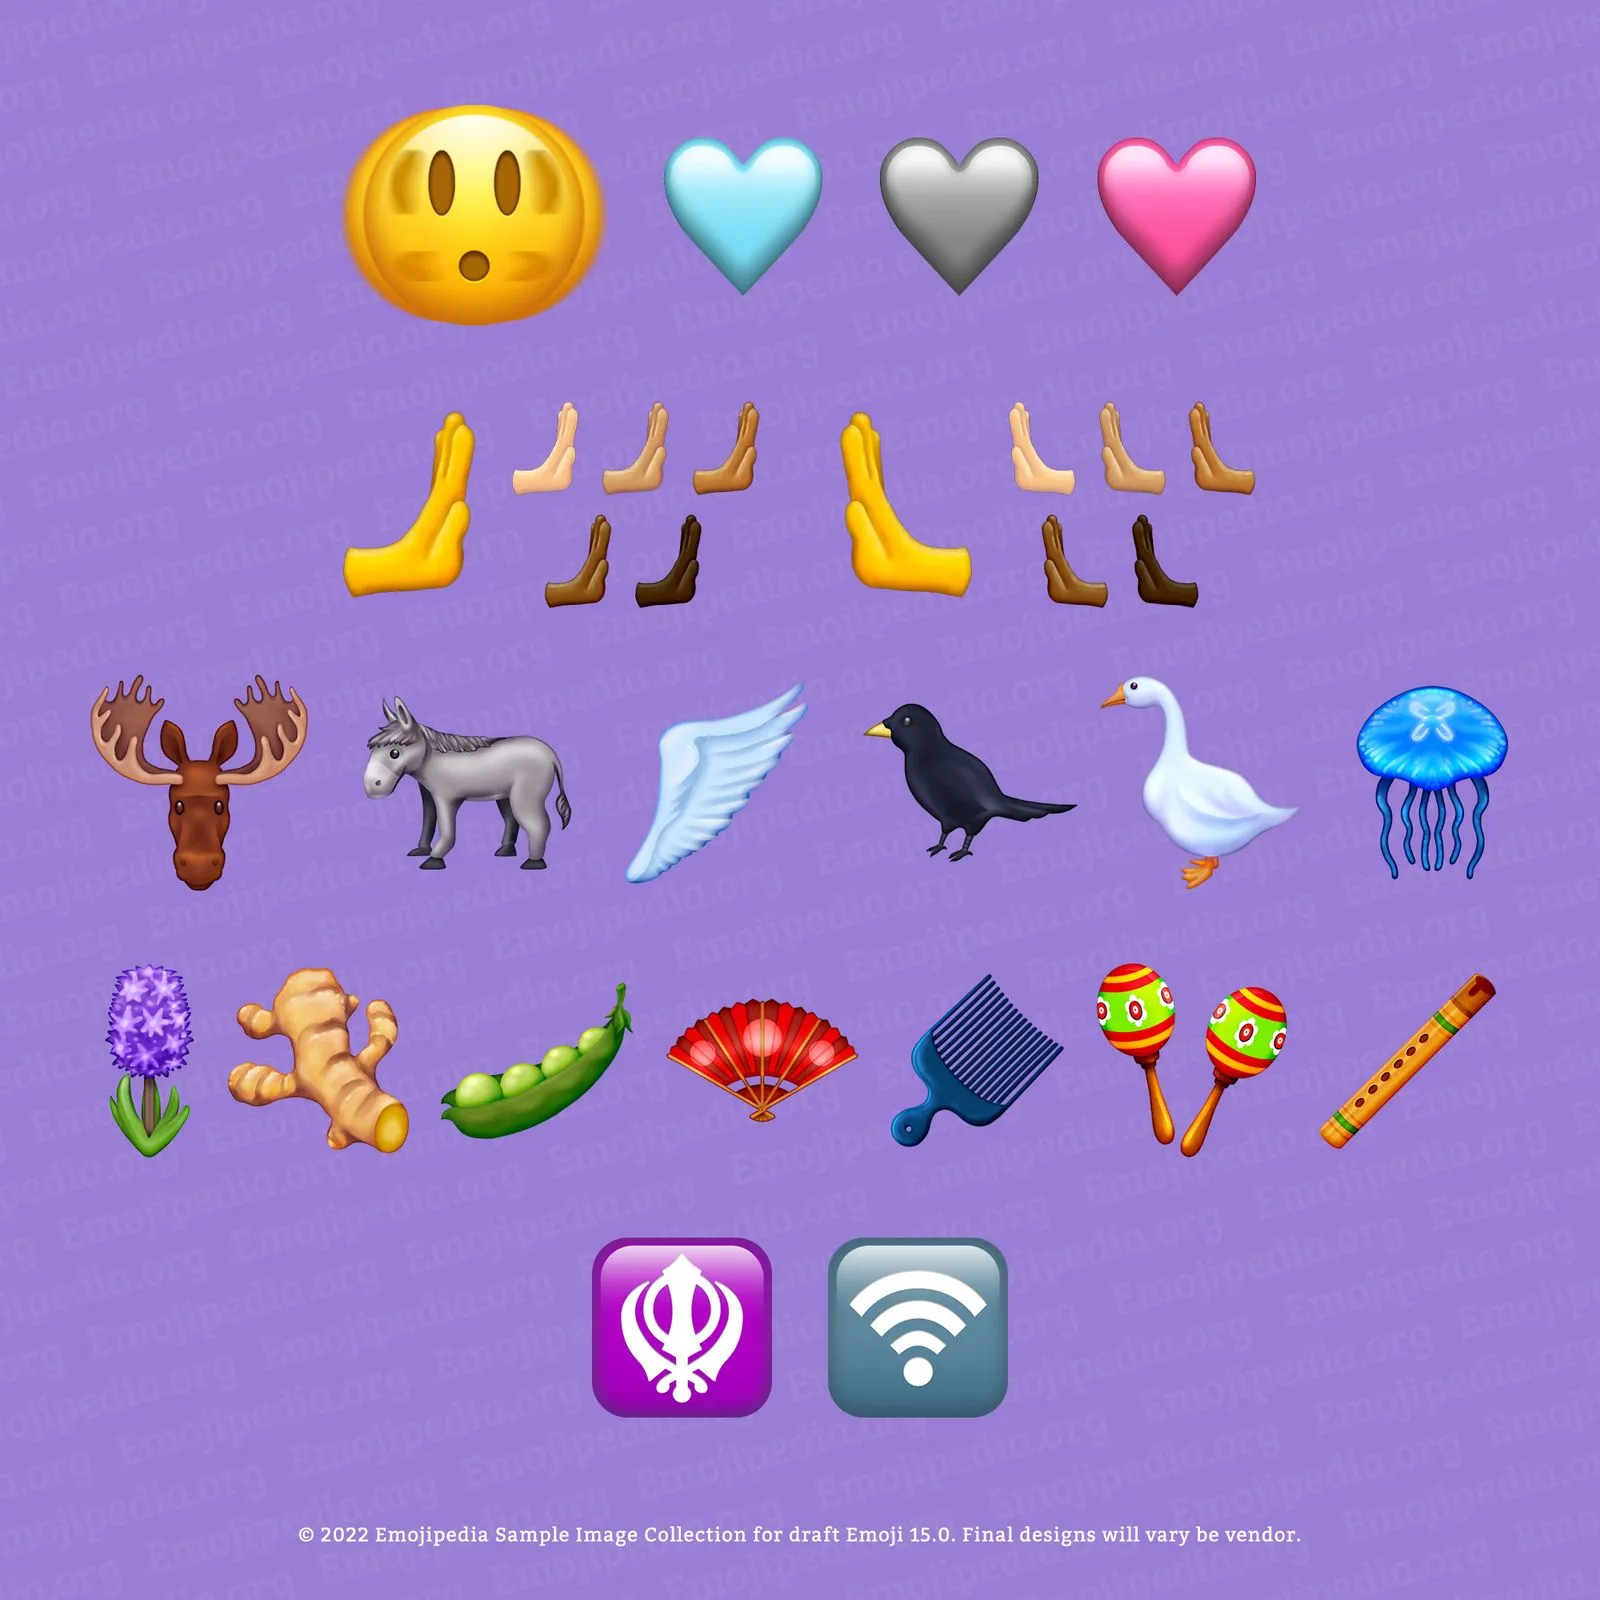 iOS 16.4 update adds emoji like a moose, a goose, a pink heart and a Wi-Fi symbol